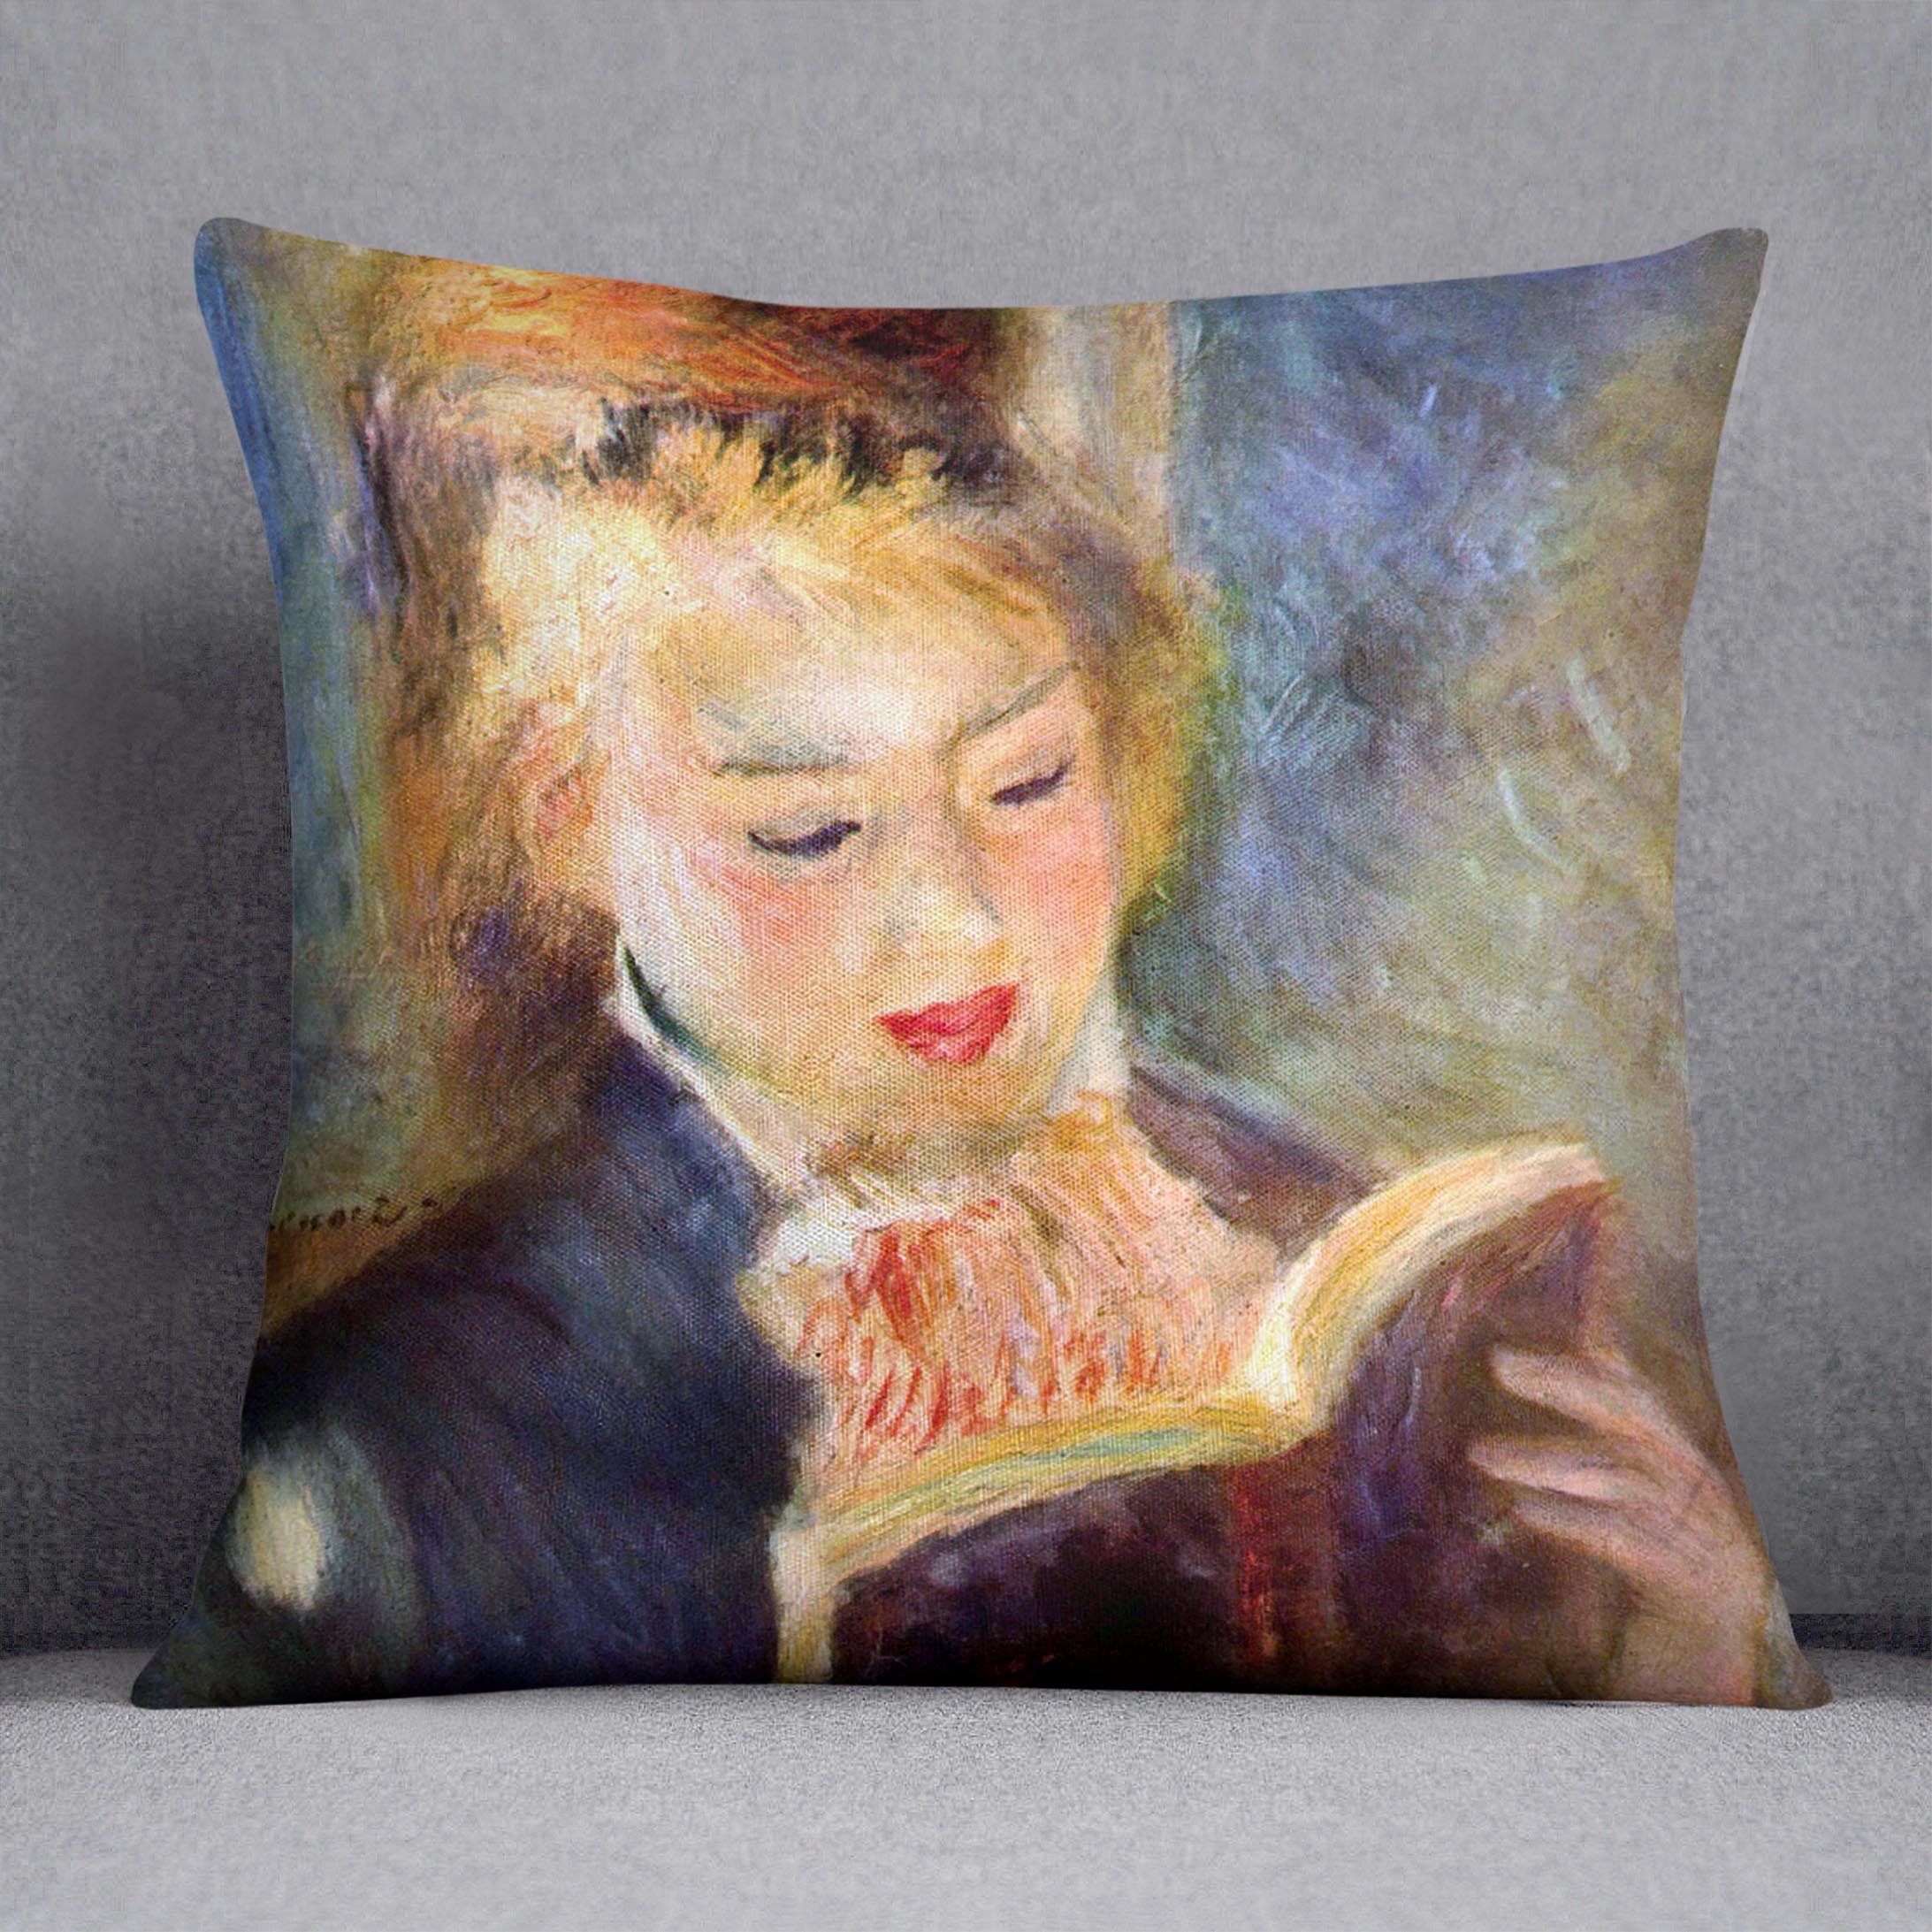 A reading girl1 by Renoir Cushion